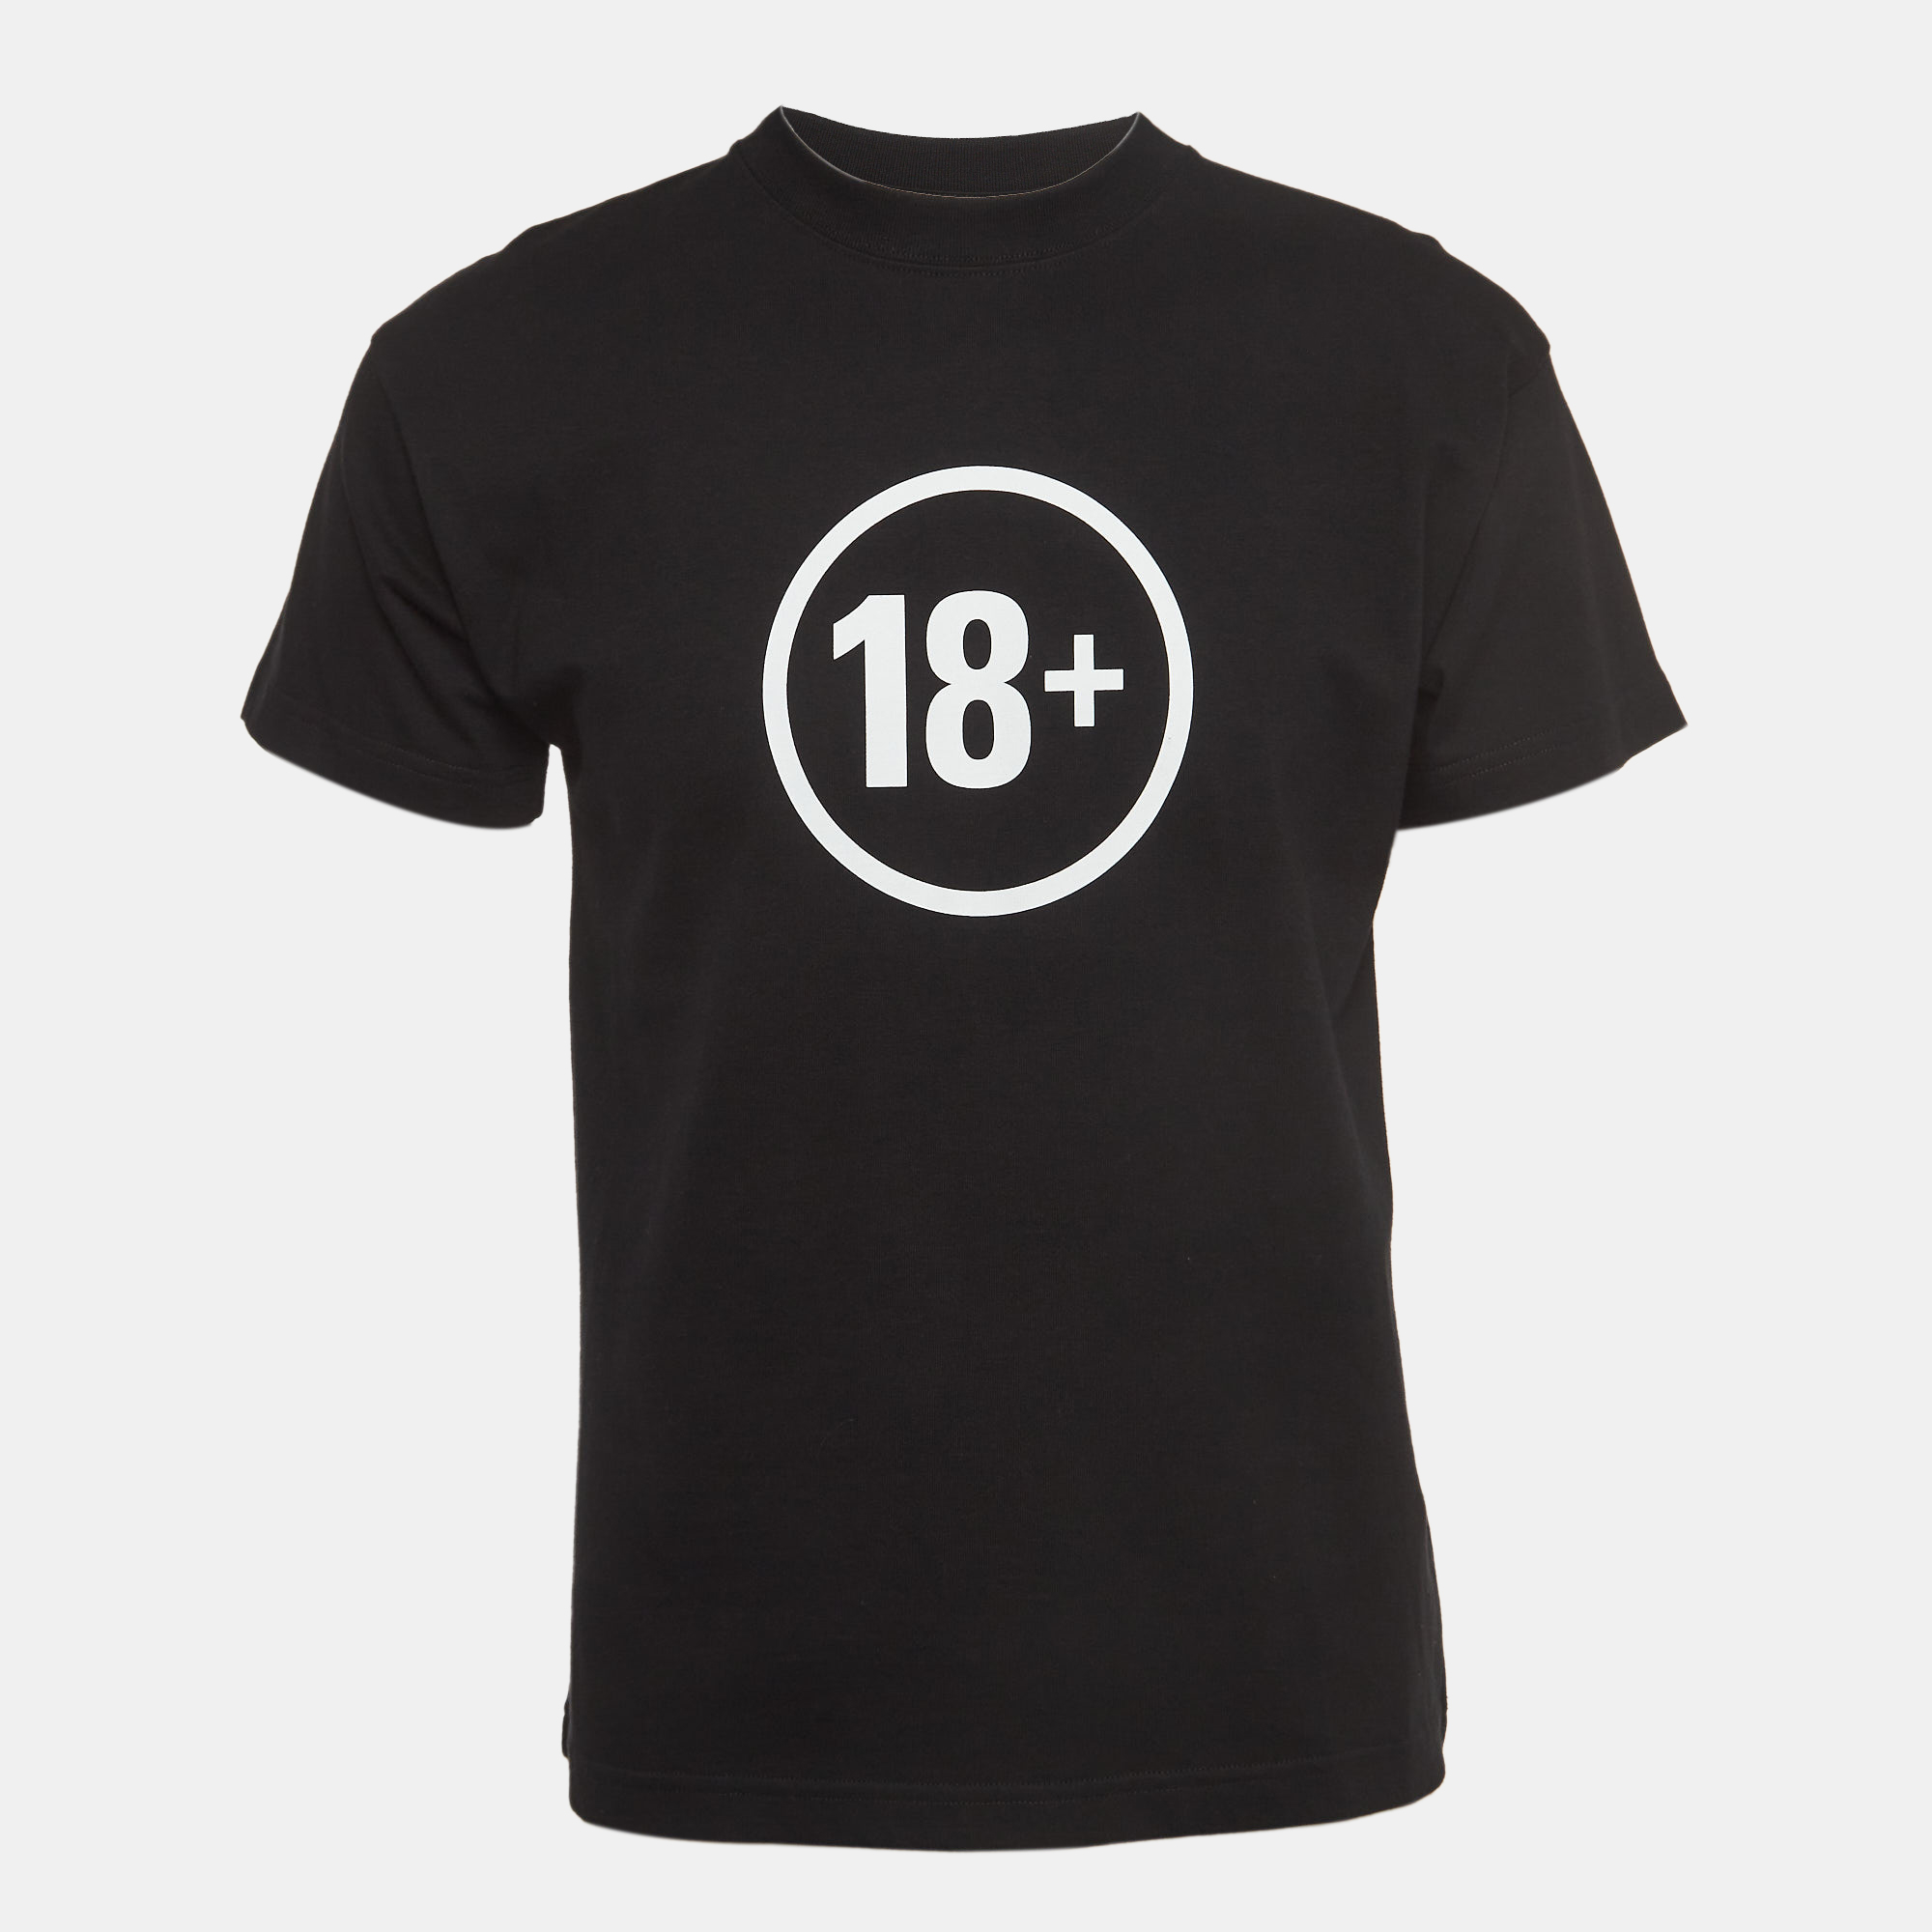 Balenciaga Black Graphic Print Cotton T-Shirt XS